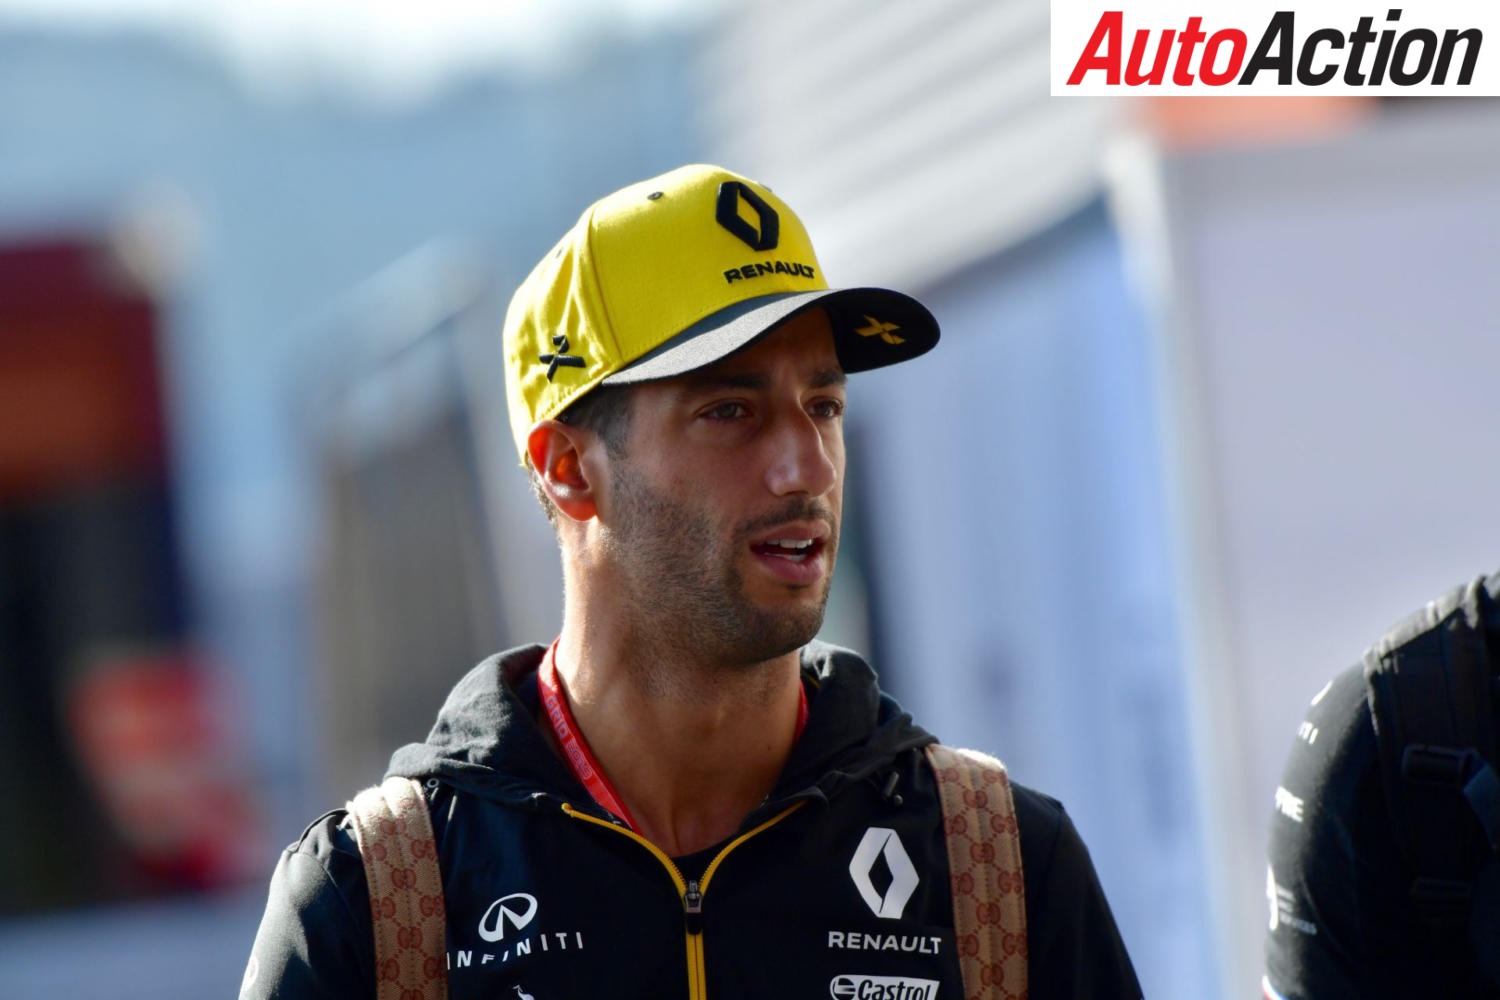 Daniel Ricciardo considered not racing - Photo: Suttons Images